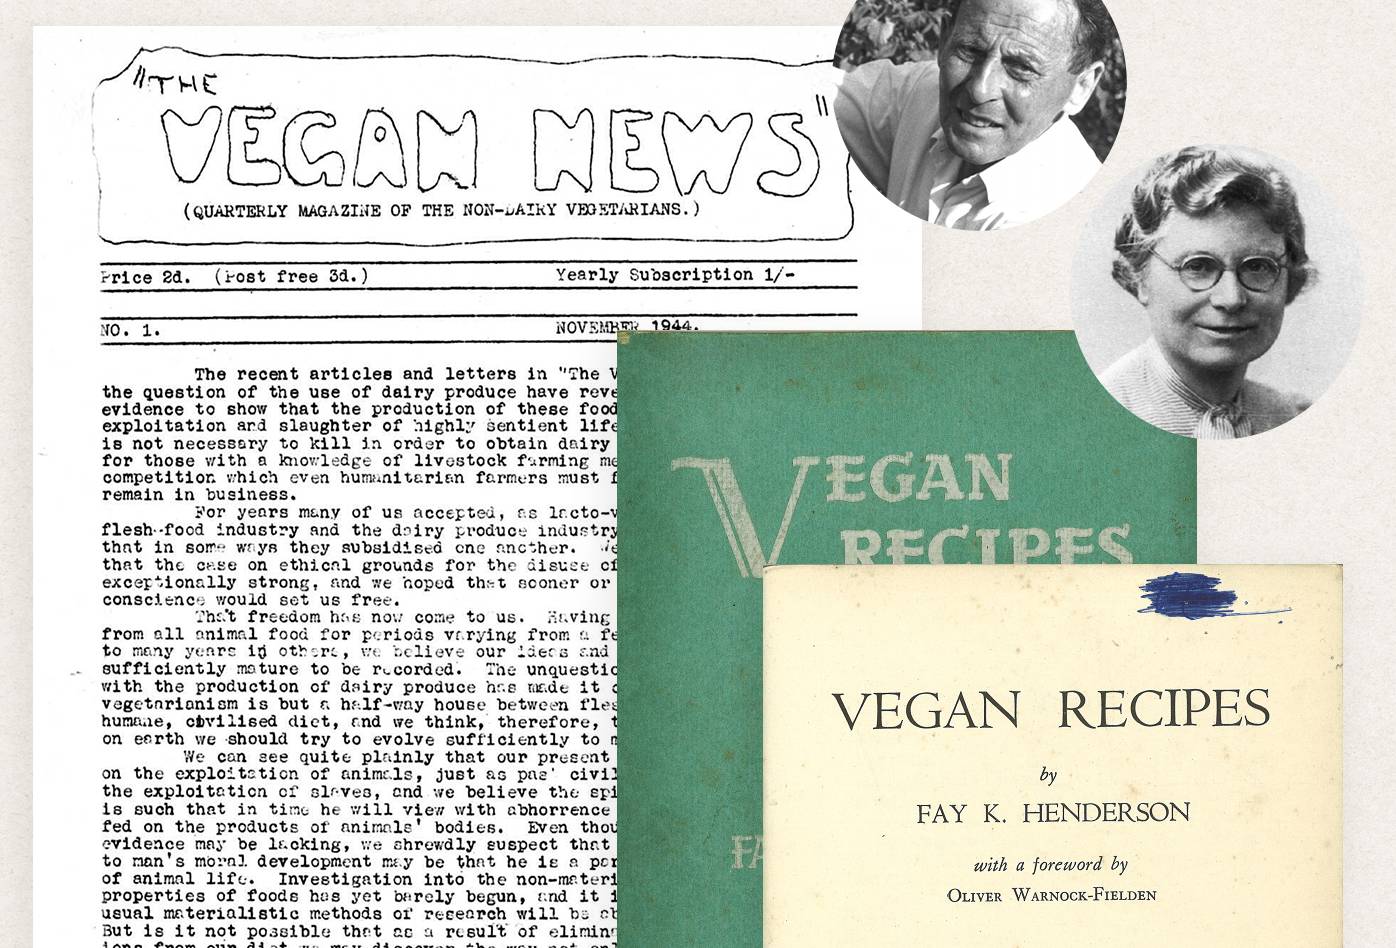 The Vegan News #1・Donald Watson / Vegan Recipes・Fay K. Henderson